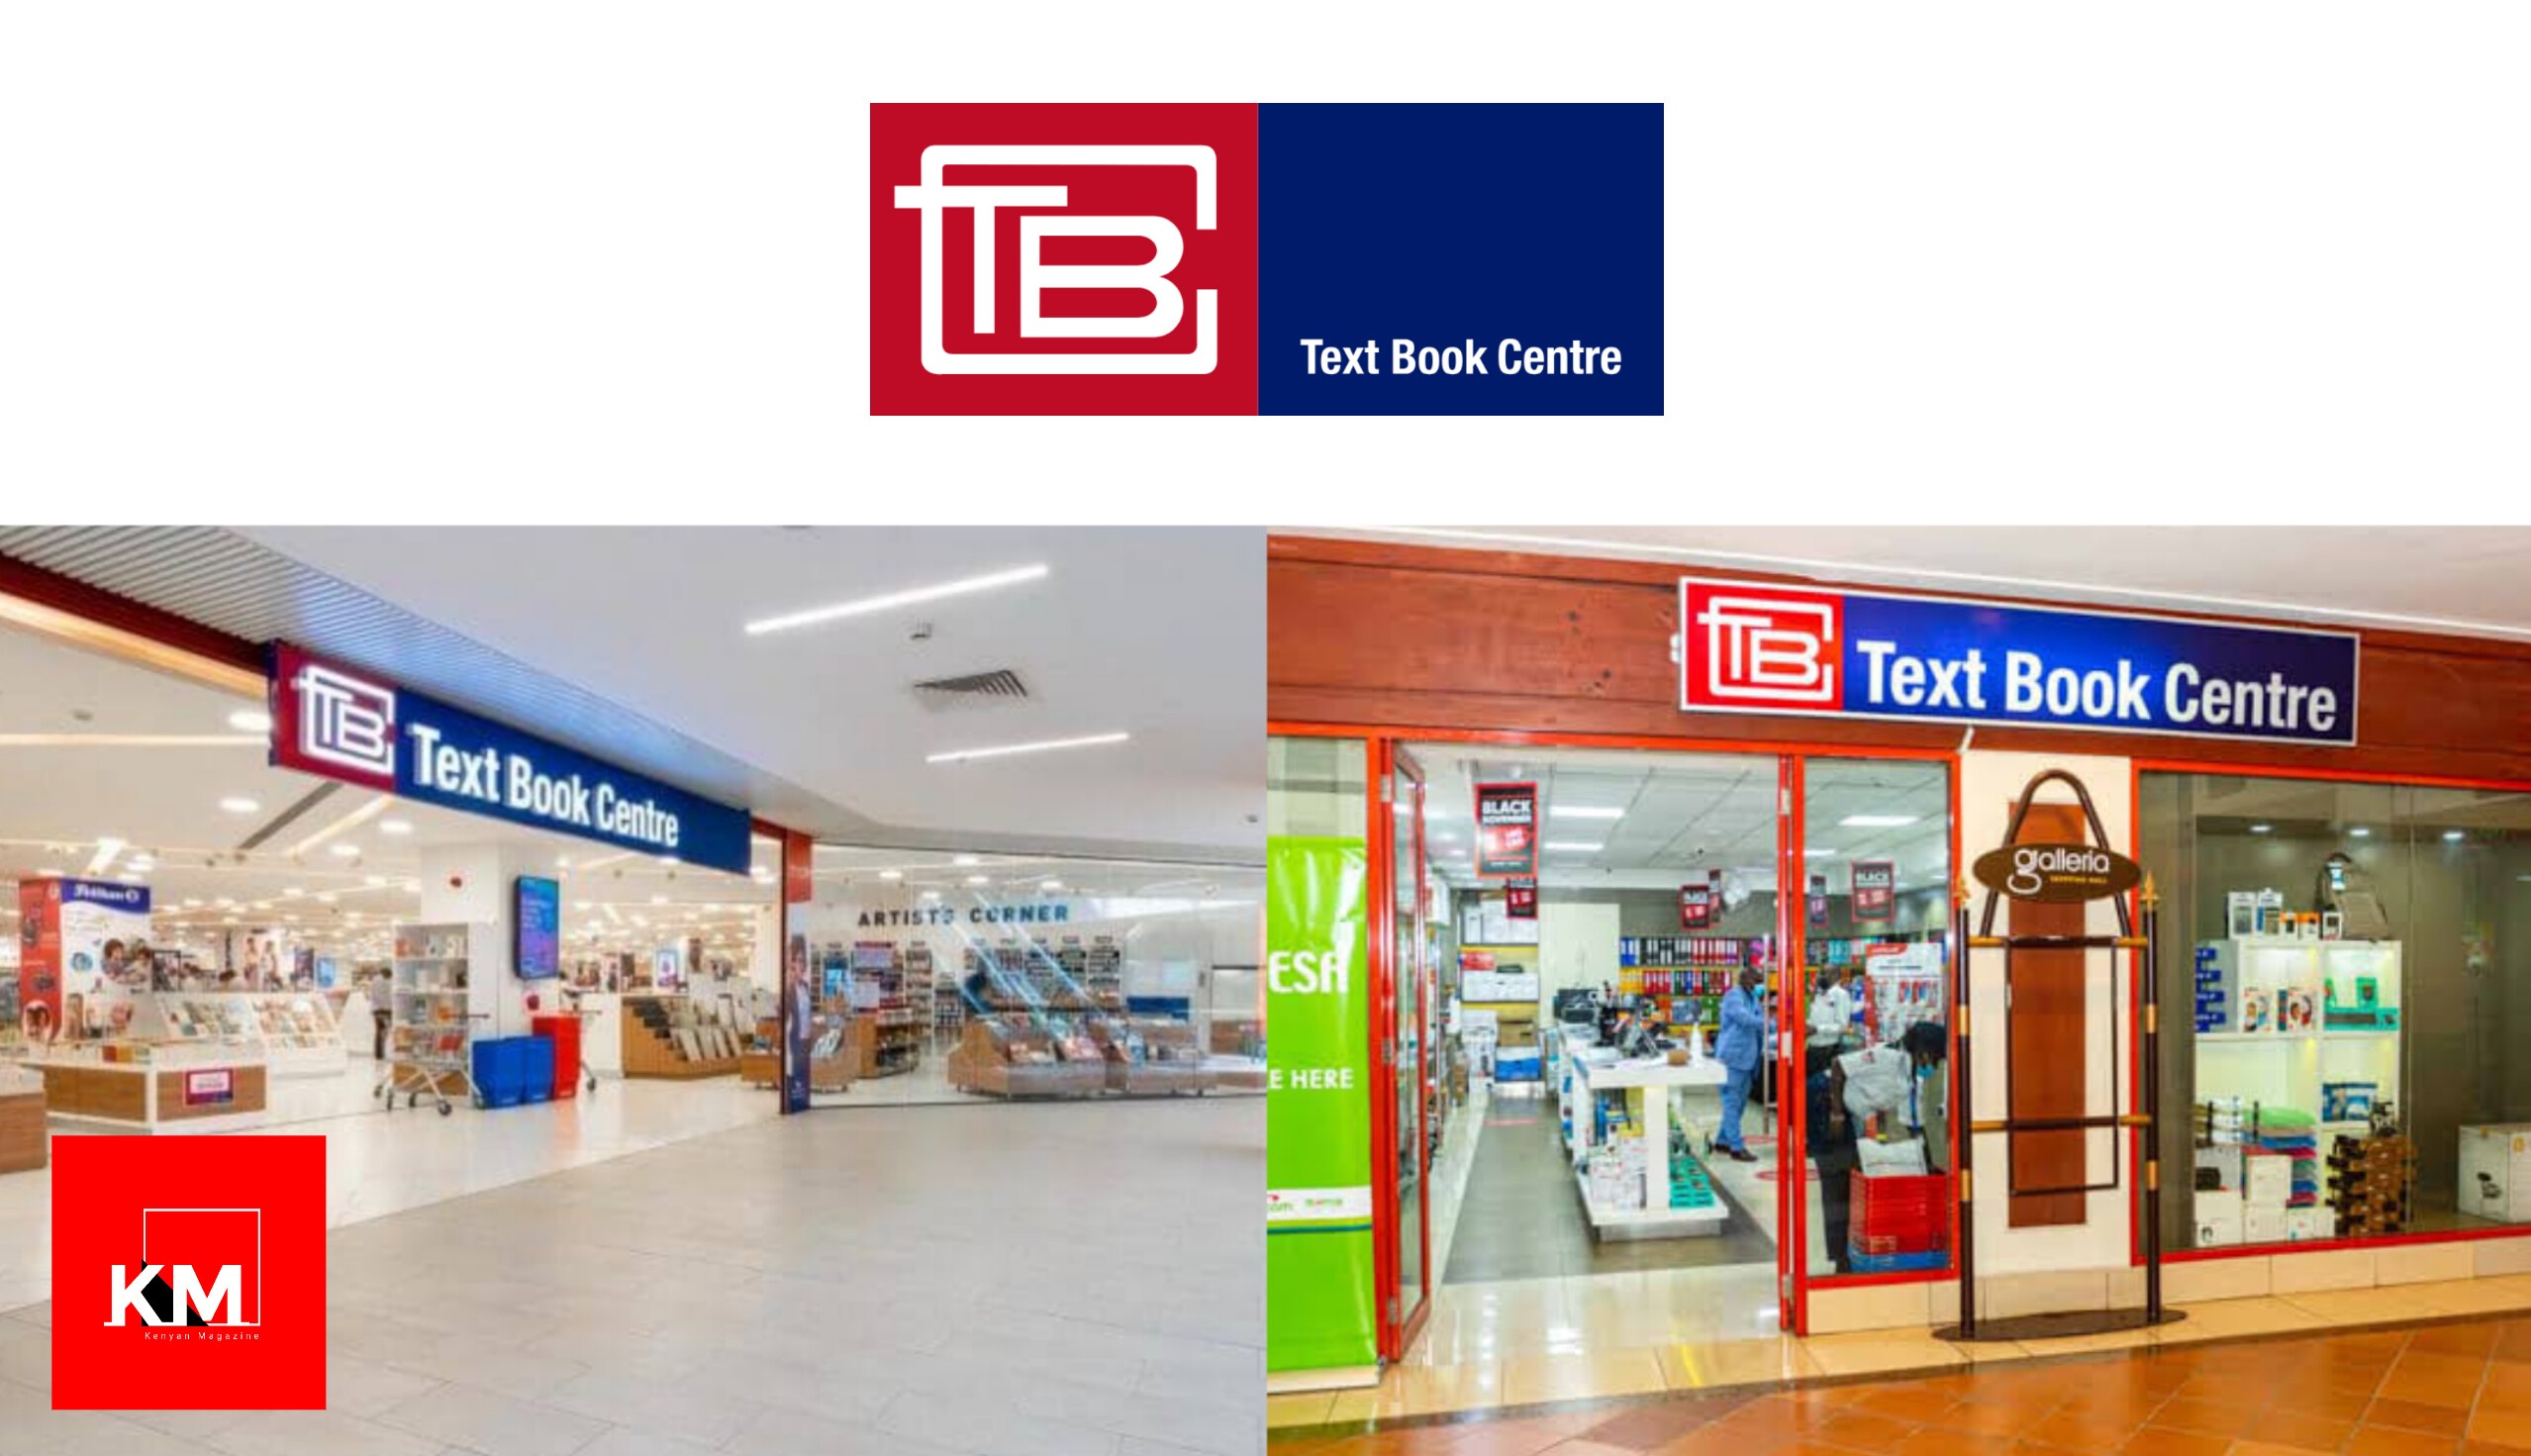 Text book centre Kenya branches